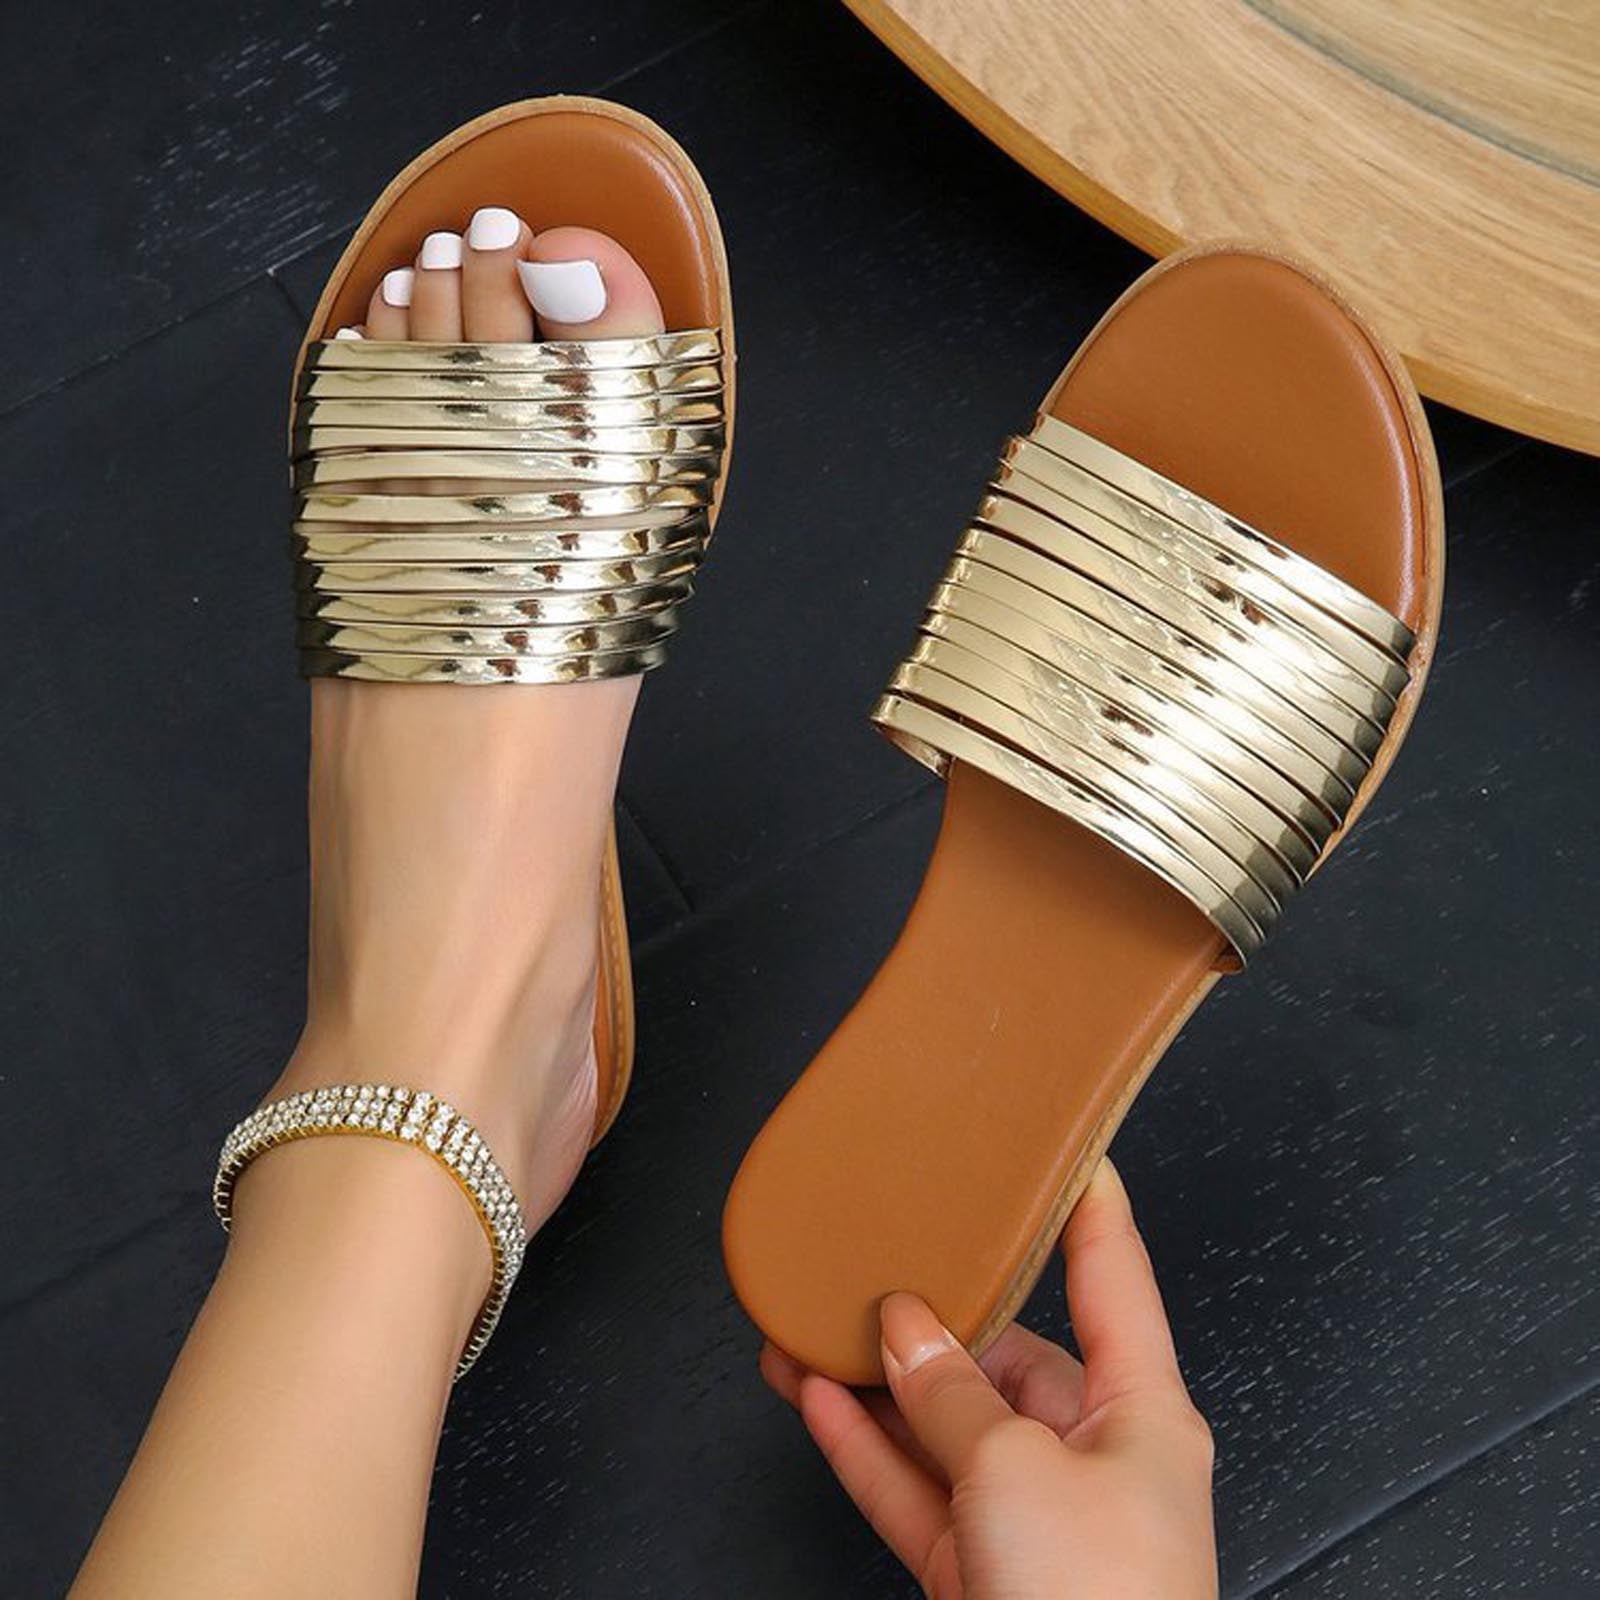 Voncos Women's Slippers Sale- Flat Ladies Beach Sandals Summer Non-Slip Causal Clearance Shoes Gold 6.5 - Walmart.com